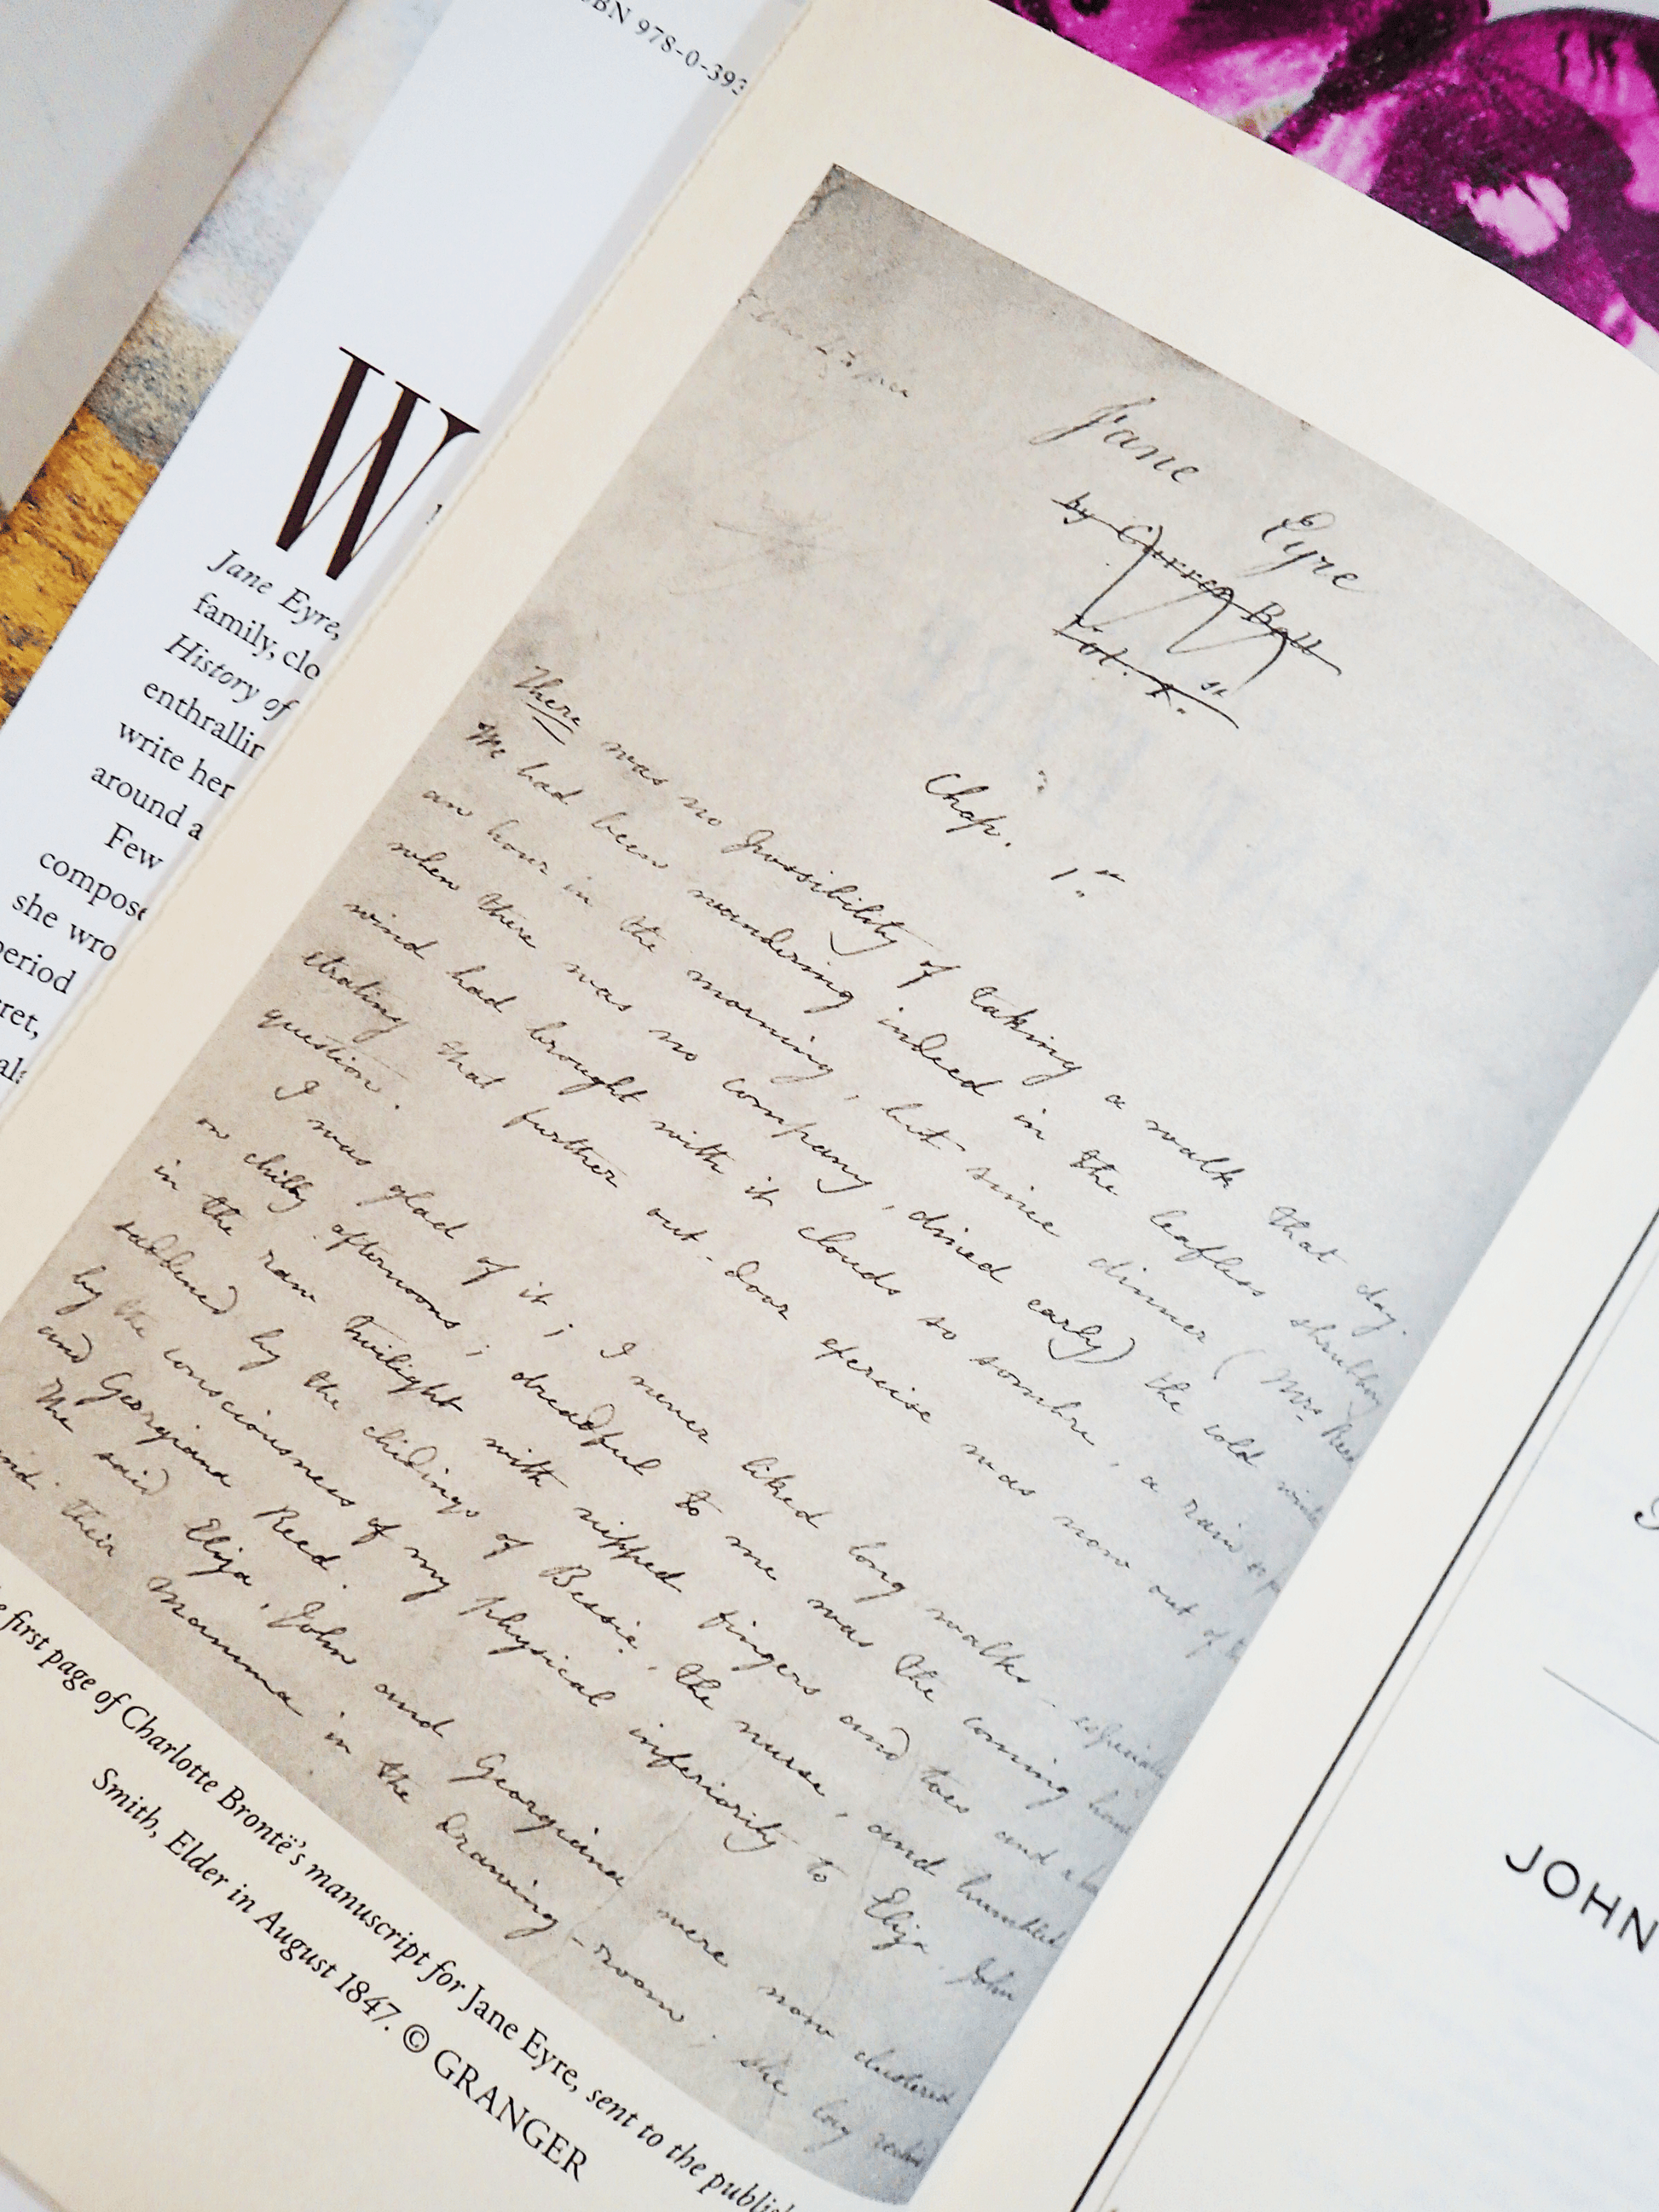 Page of The Secret History of Jane Eyre John Pfordresher Vintage Hardback First Edition showing first page of manuscript of novel Jane Eyre. 